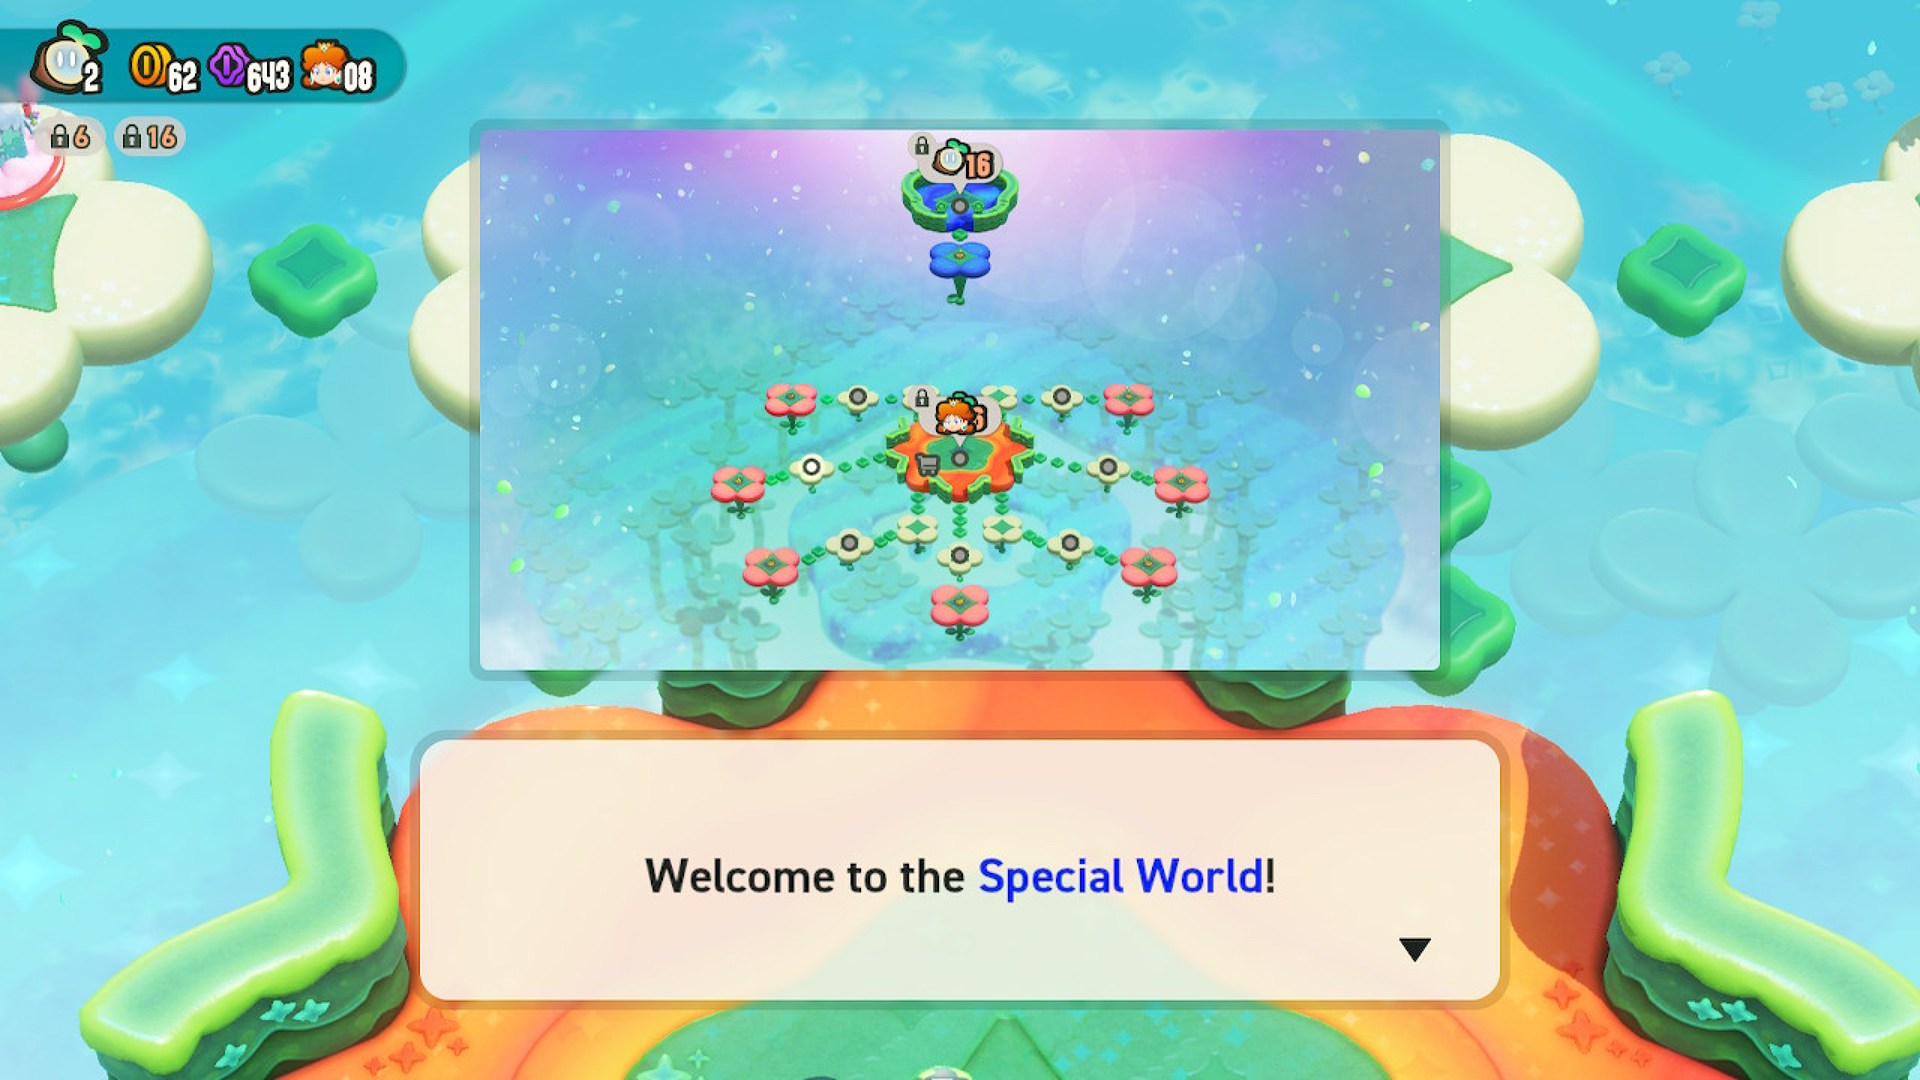 The Special World intro scene in Super Mario Bros. Wonder